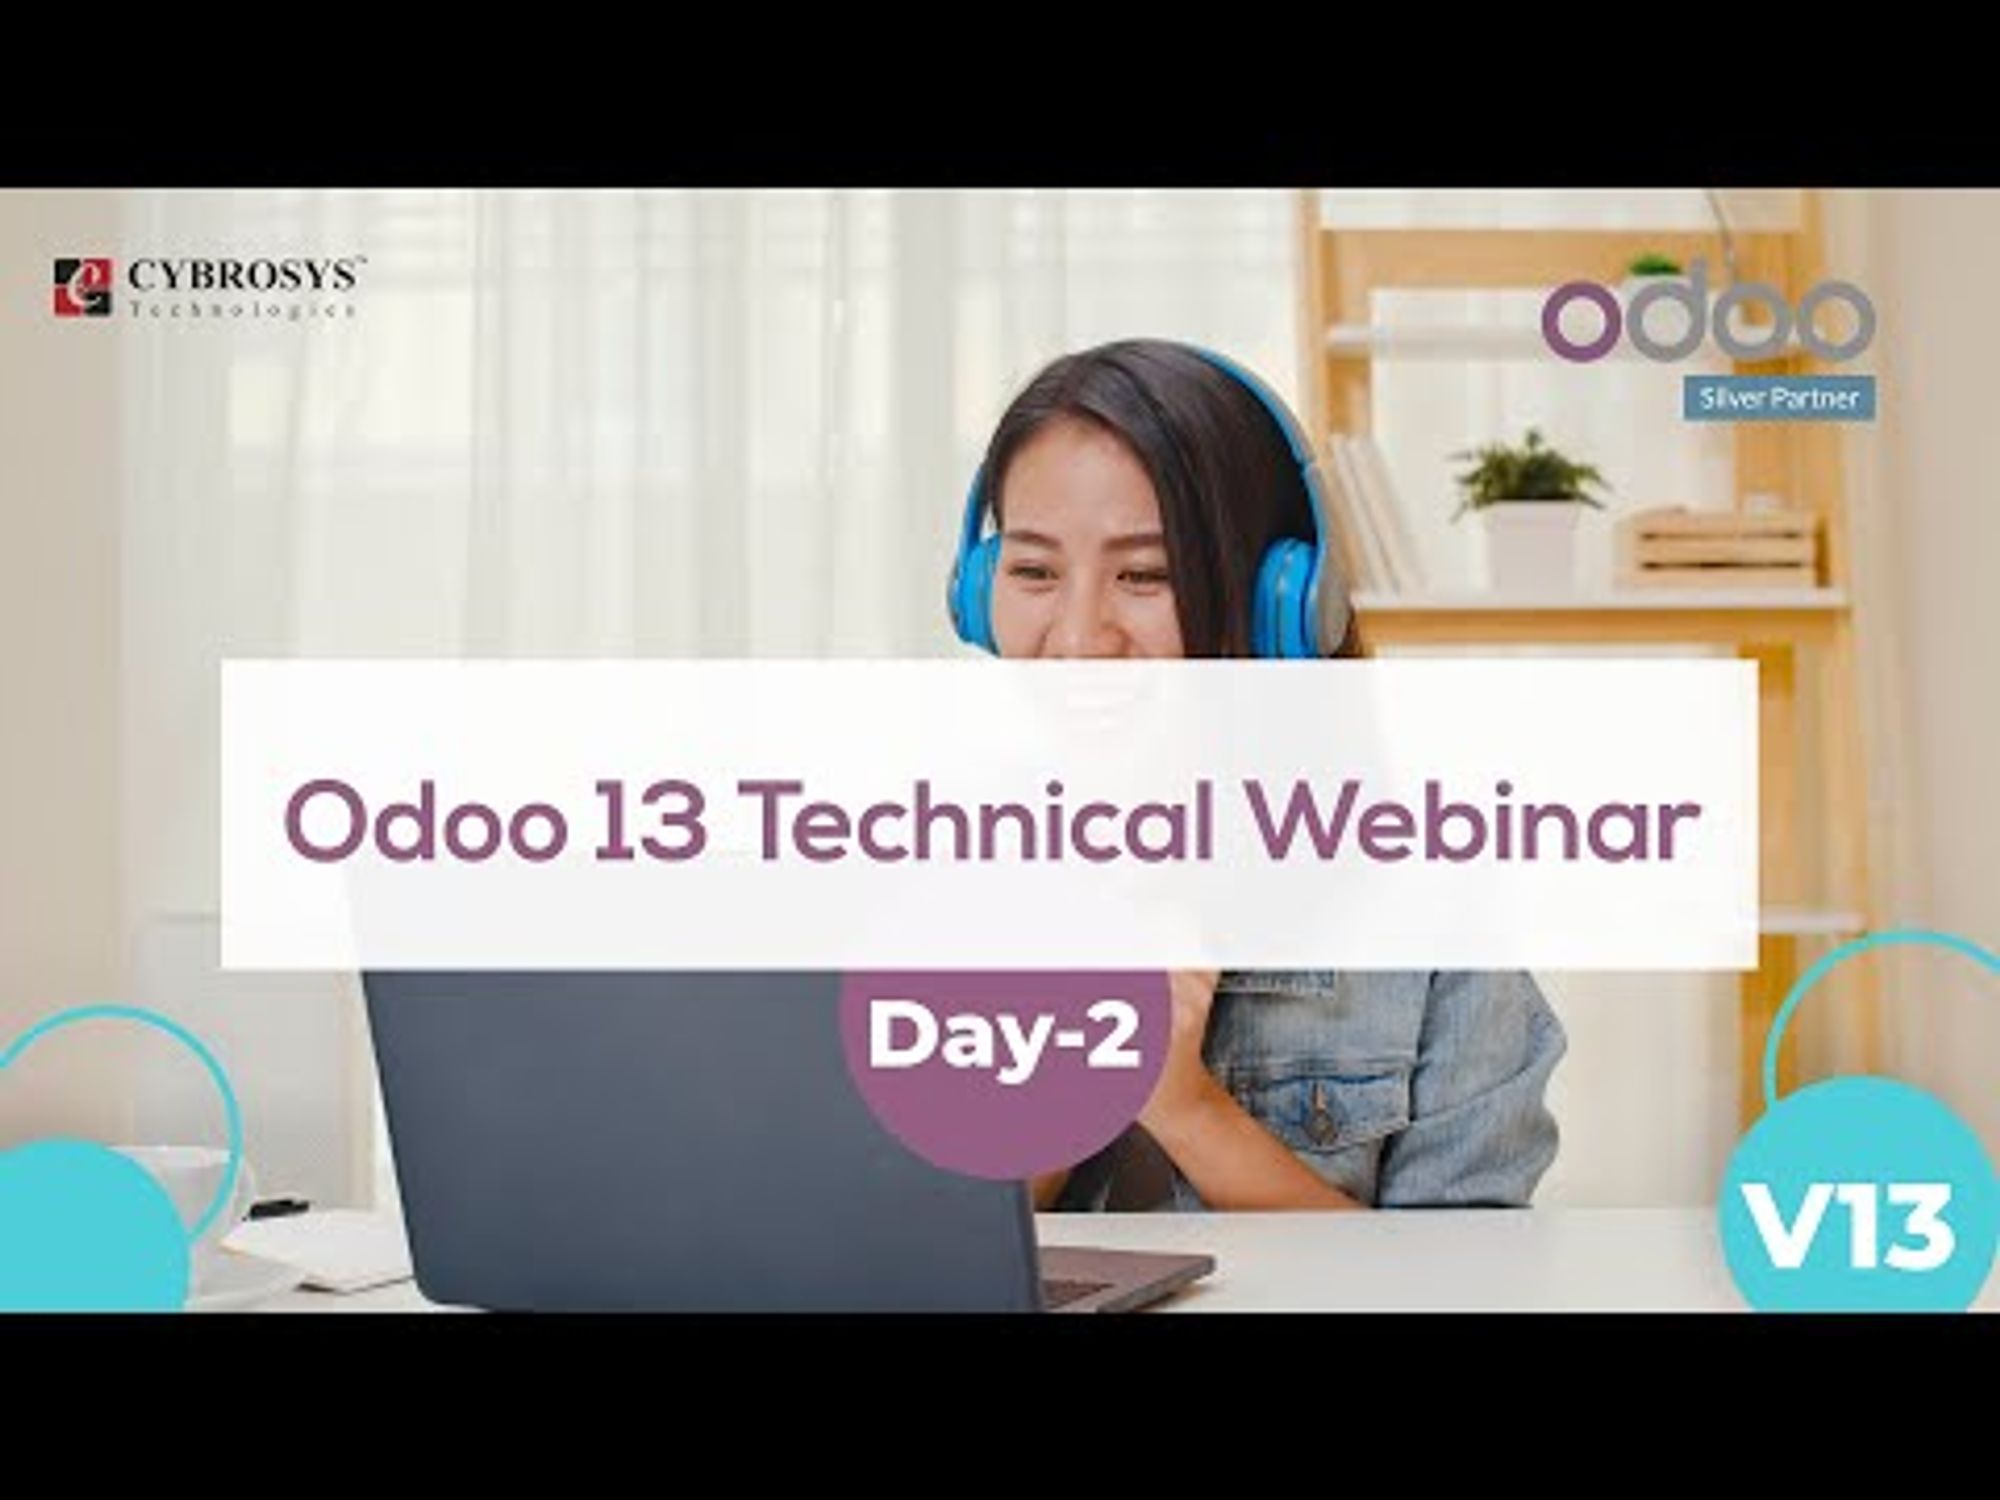 Odoo Webinar | Odoo Technical Training 2020 Day-2 | Cybrosys Technologies